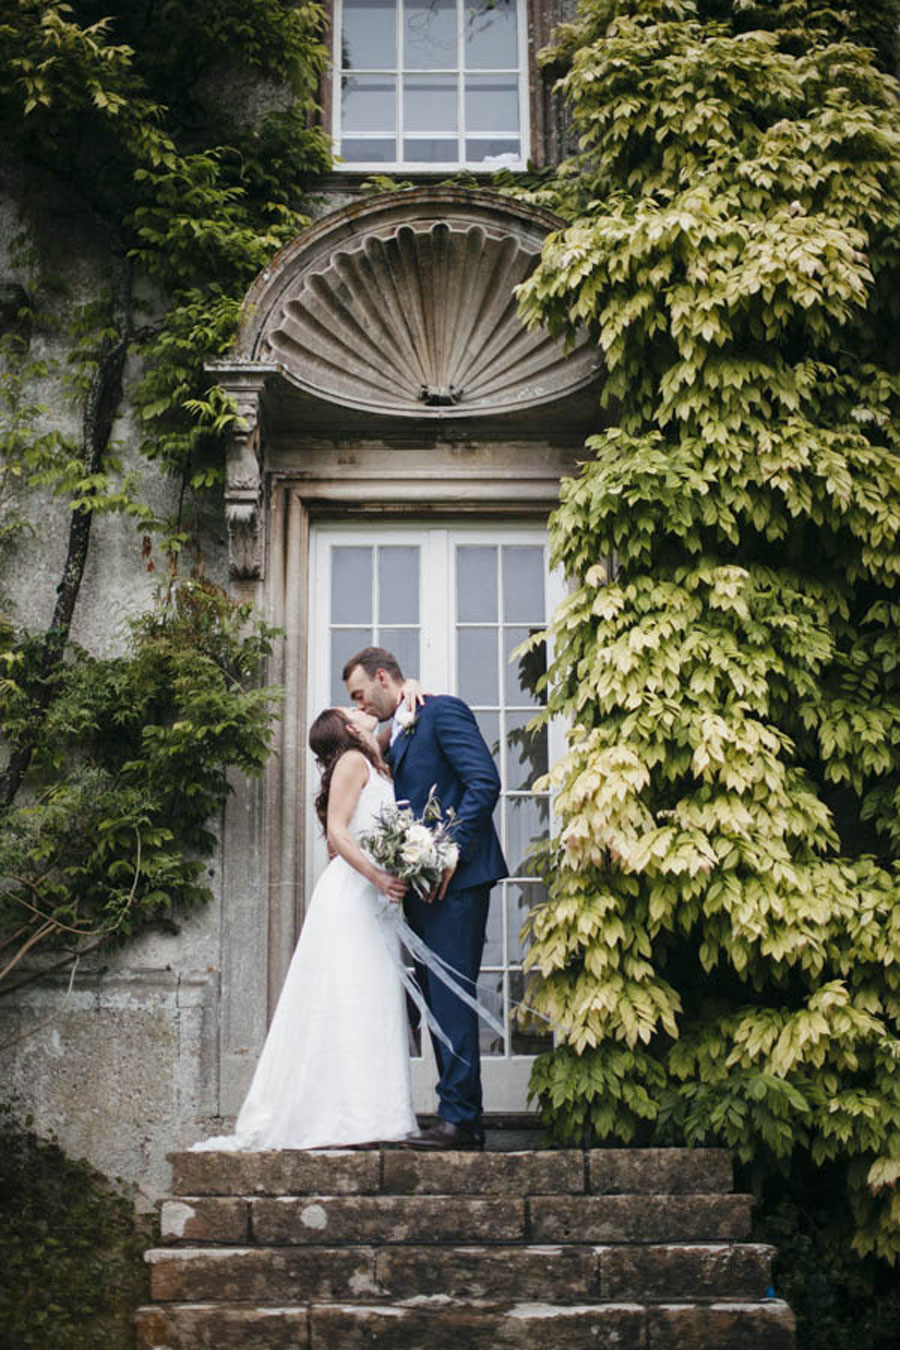 https://www.wantthatwedding.co.uk/wp-content/uploads/2016/11/Lovely-Lavender-An-Elegant-Rustic-French-INspired-Wedding217.jpg